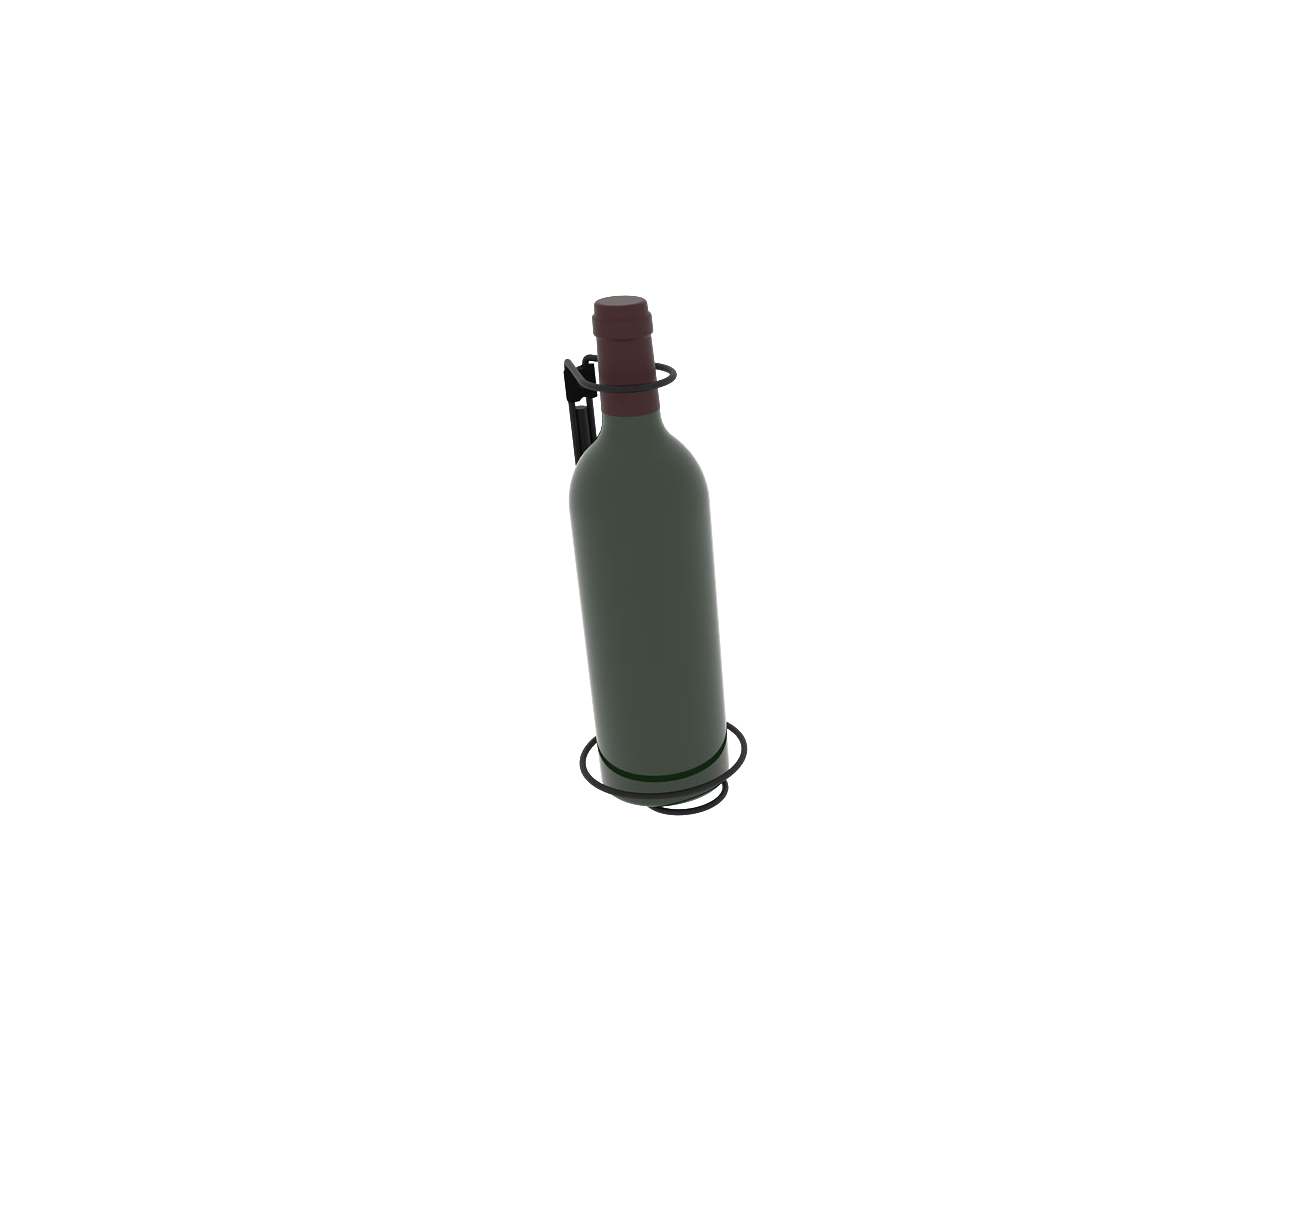 Vertical bottle holder